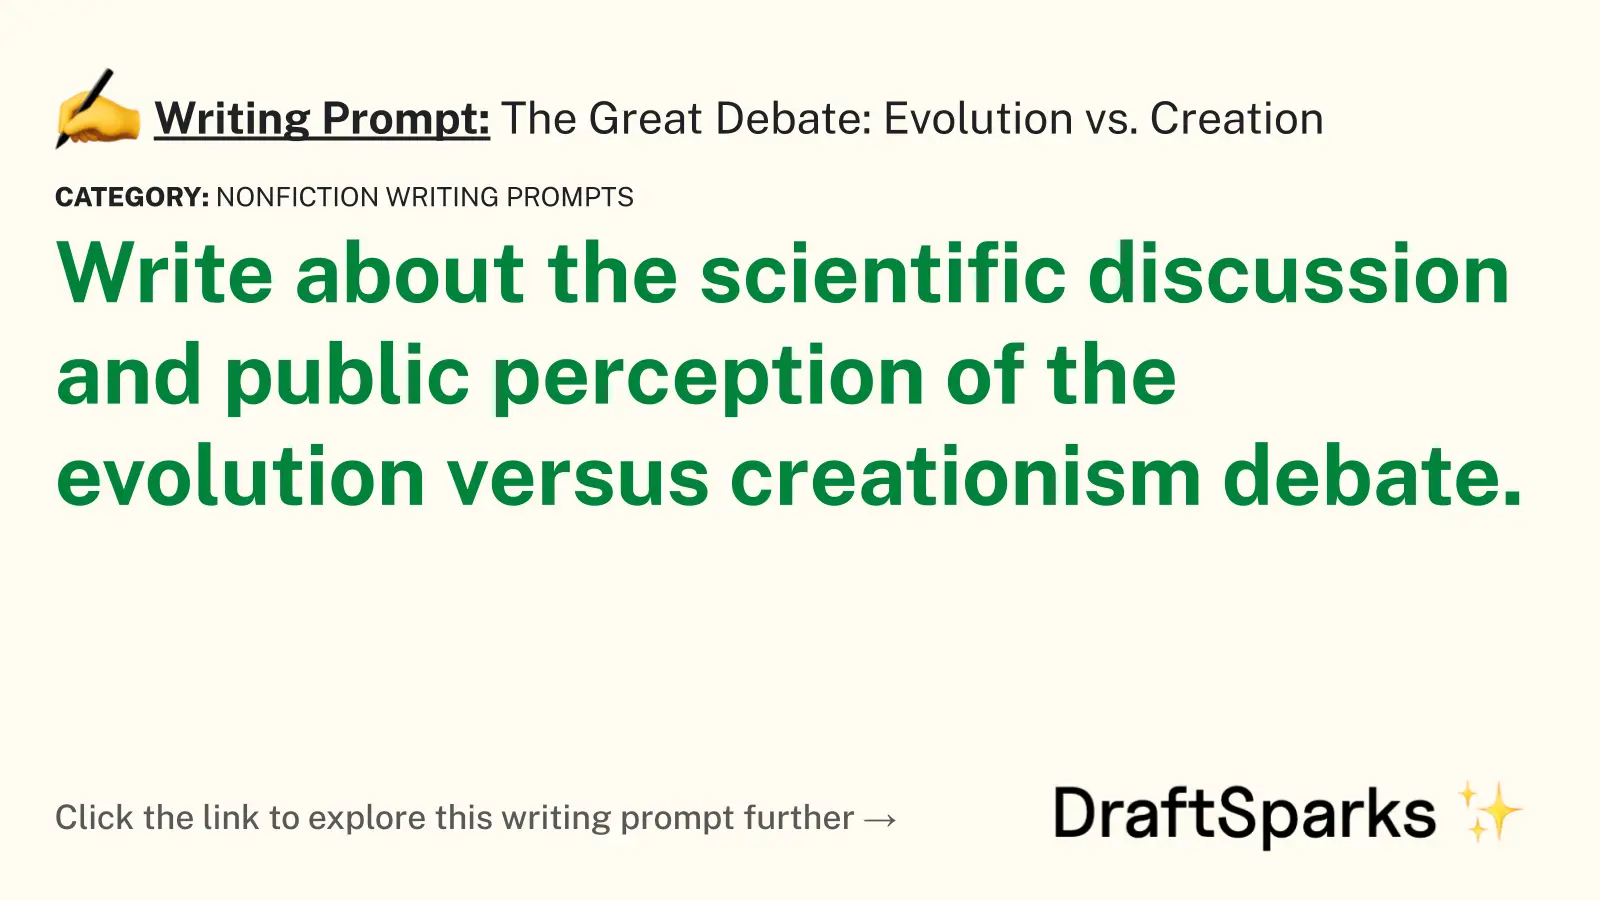 The Great Debate: Evolution vs. Creation